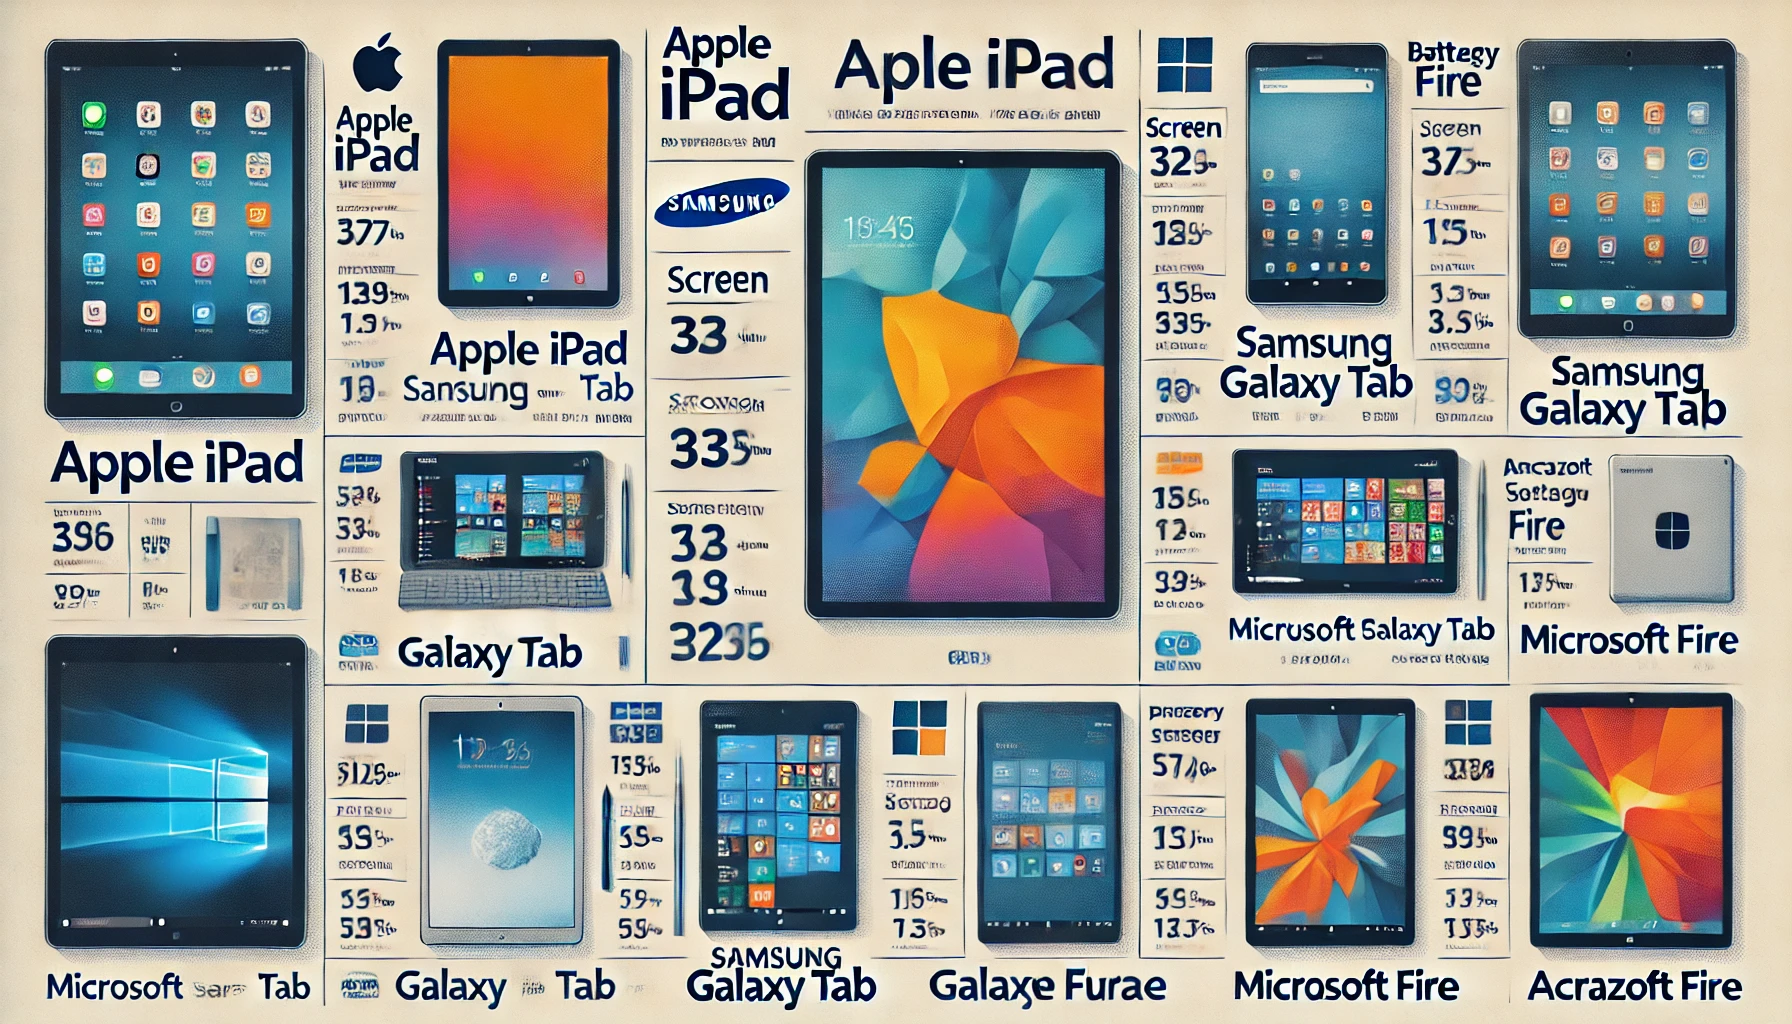 A Comparison of Popular Tablet Brands